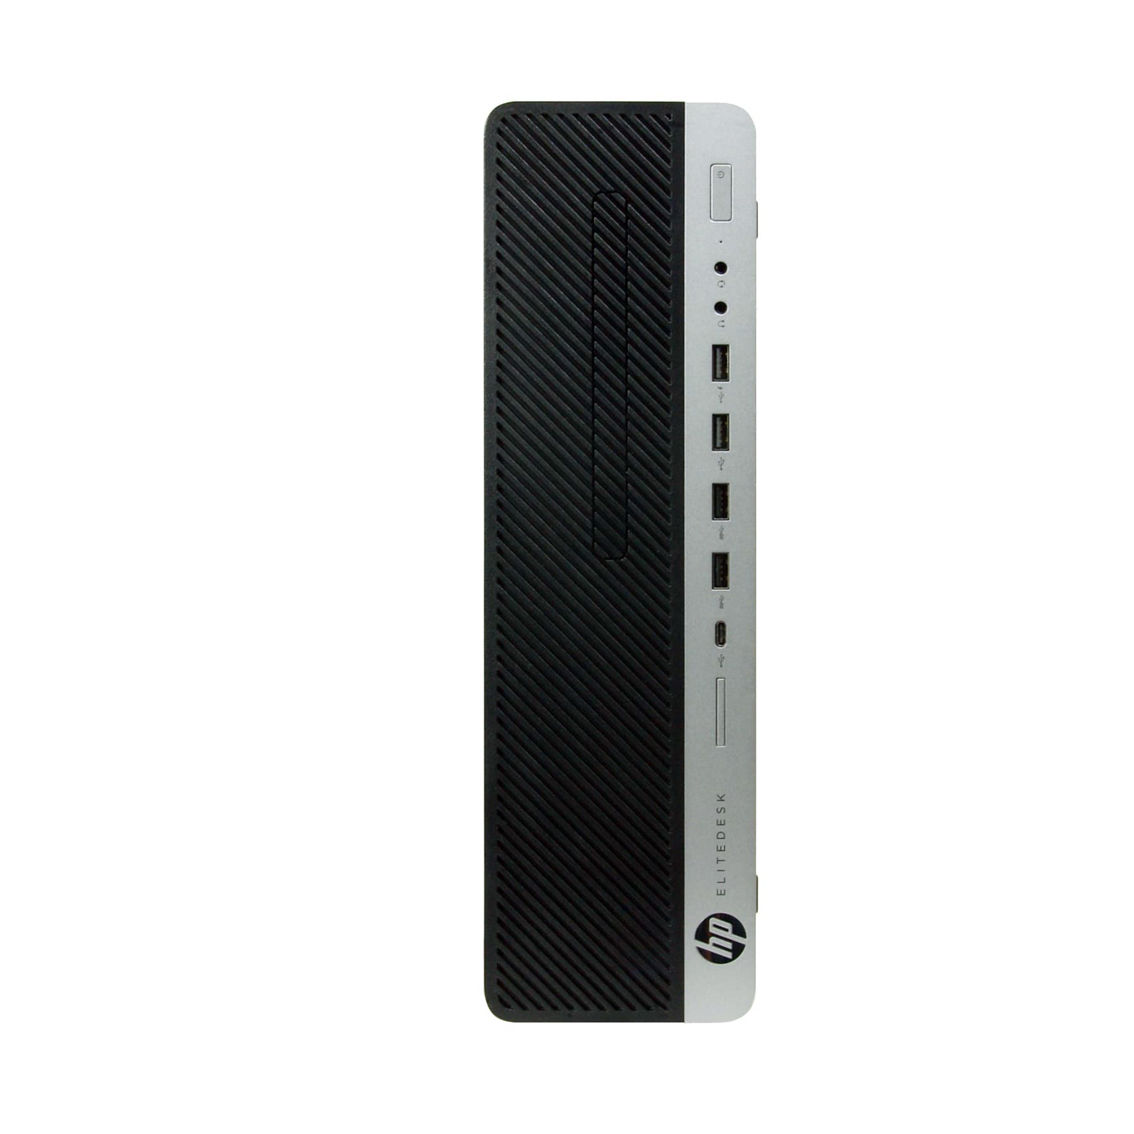 HP 800 G3-SFF Core i7-6700 3.4GHz 16GB 256GB SSD PC (Refurbished) - Image 2 of 3